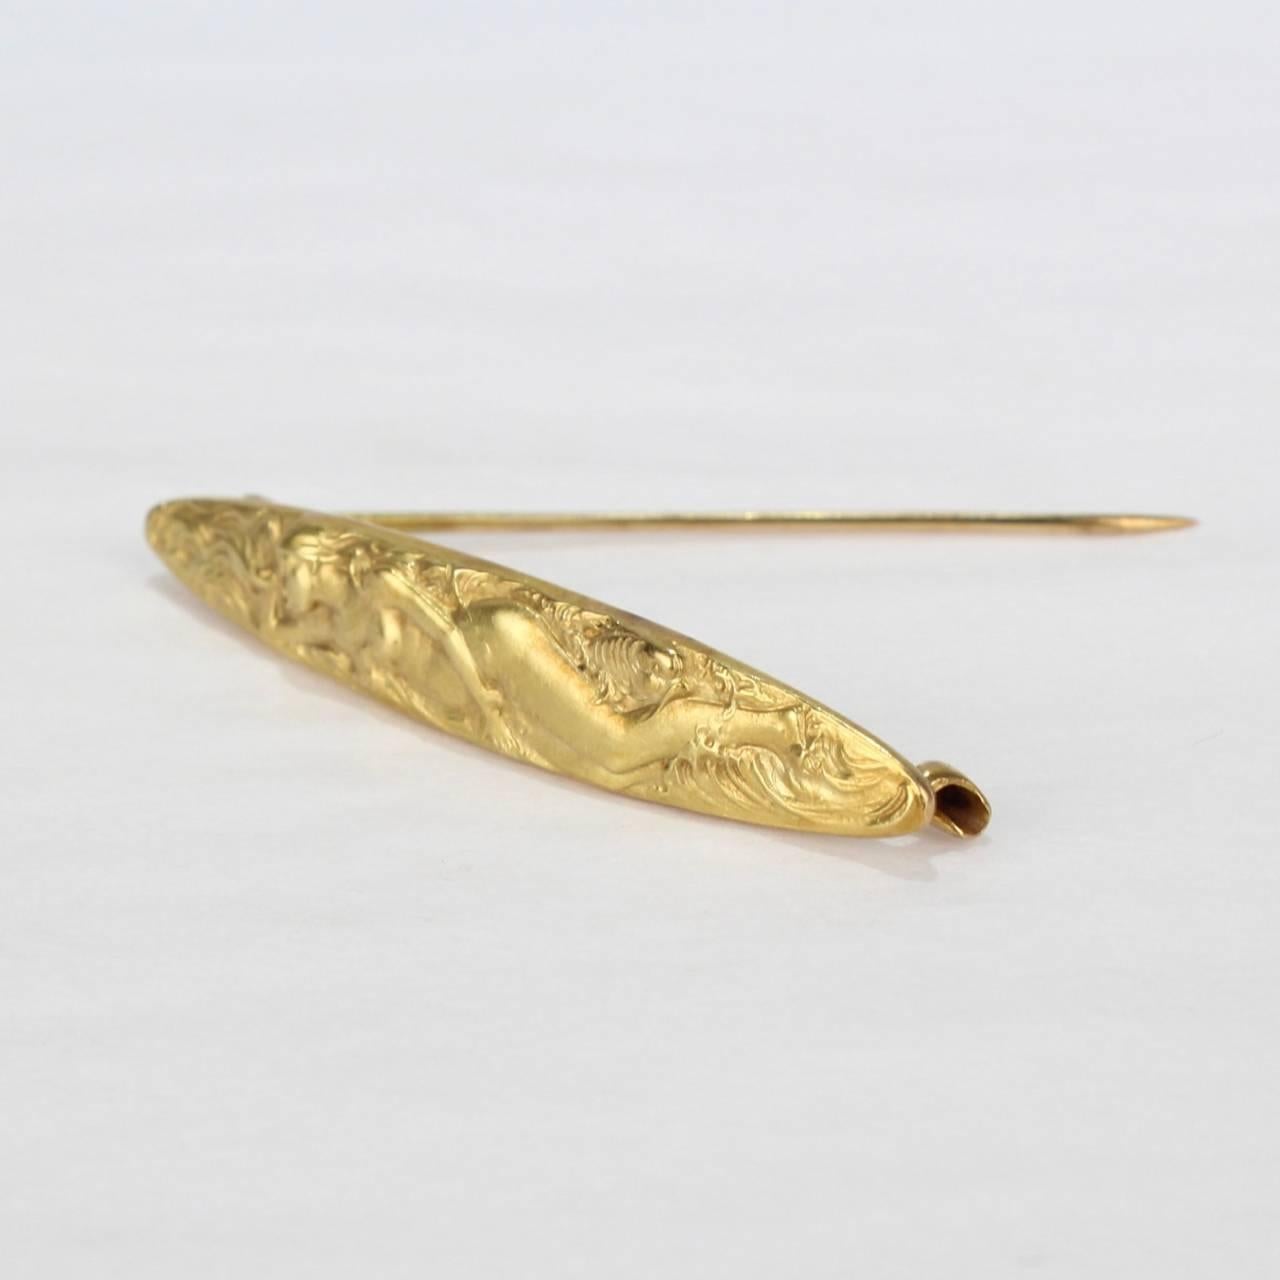 Art Nouveau Period 14 Karat Yellow Gold Lapel Pin with a Nude Lady by Krementz 1